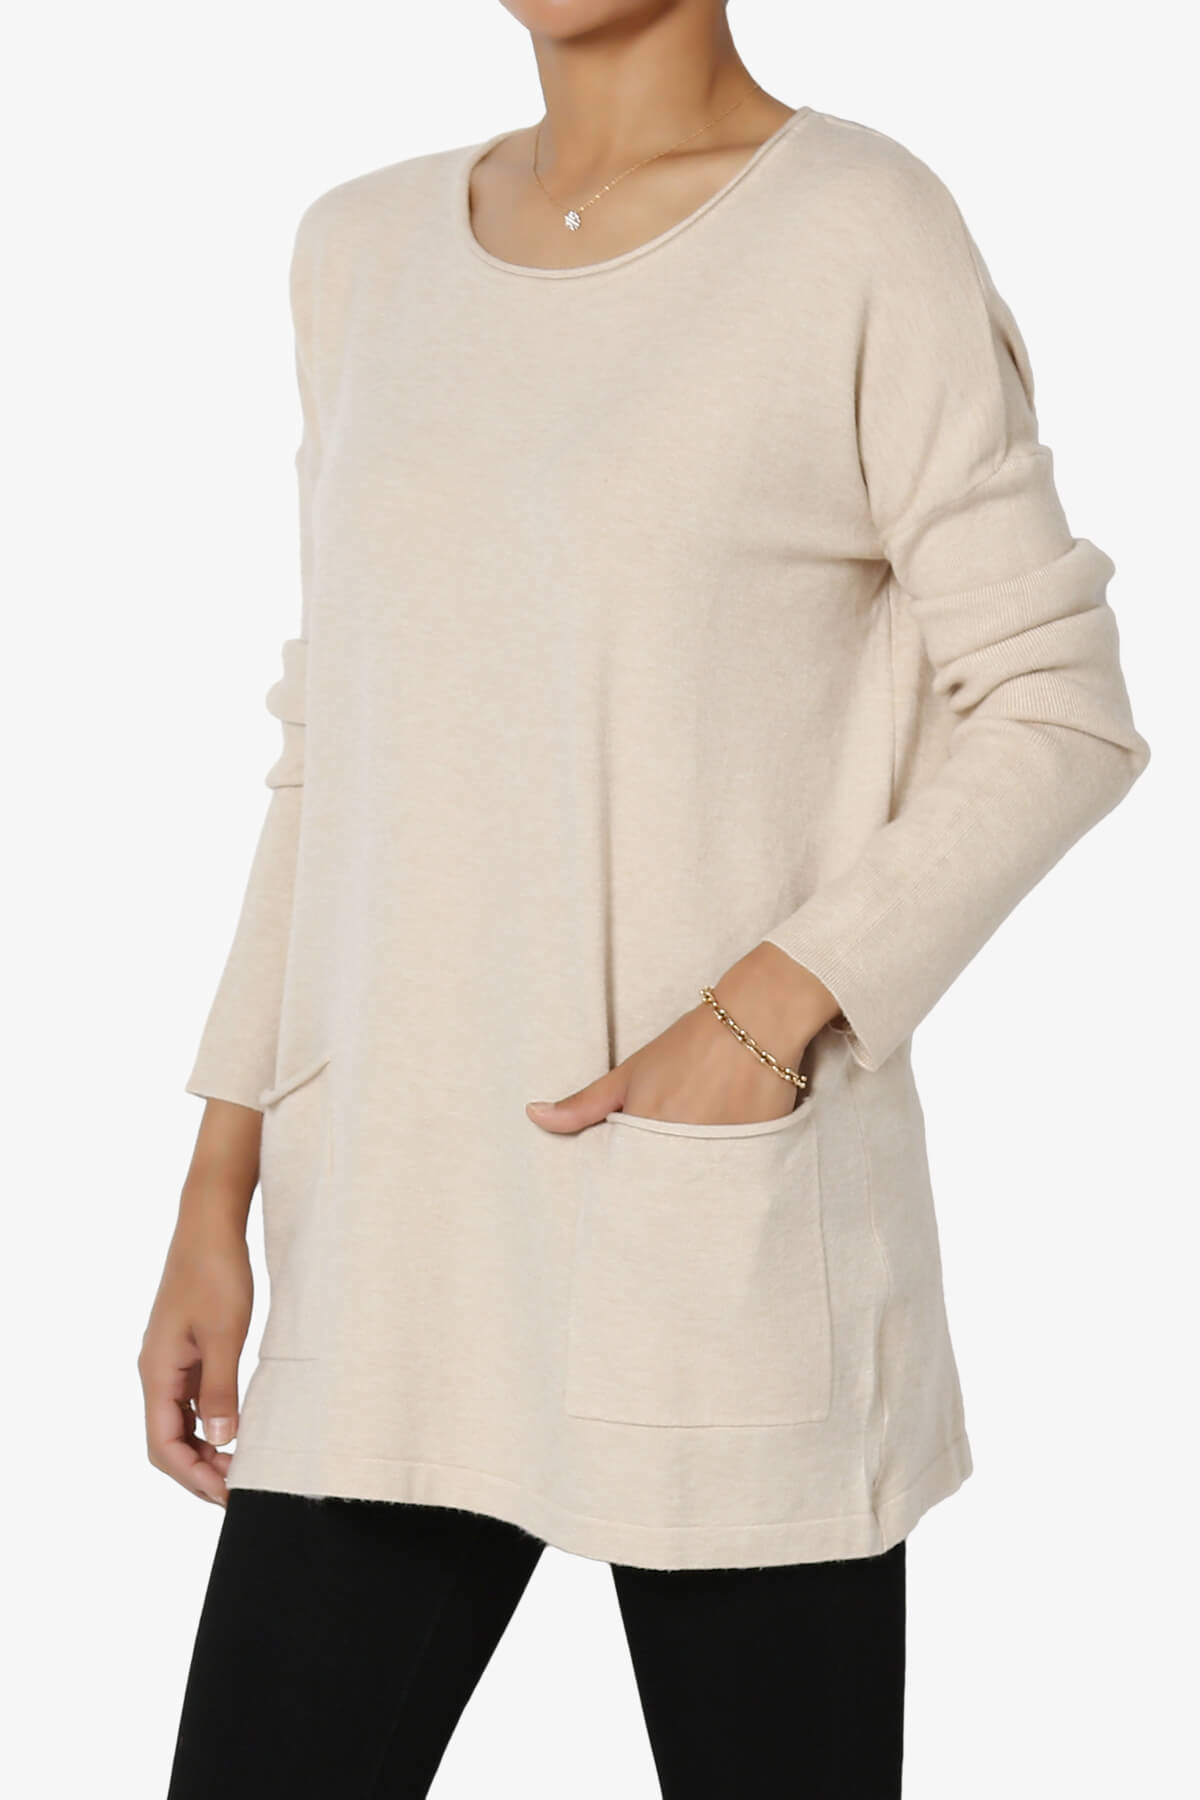 Brecken Pocket Long Sleeve Soft Knit Sweater Tunic HEATHER BEIGE_3